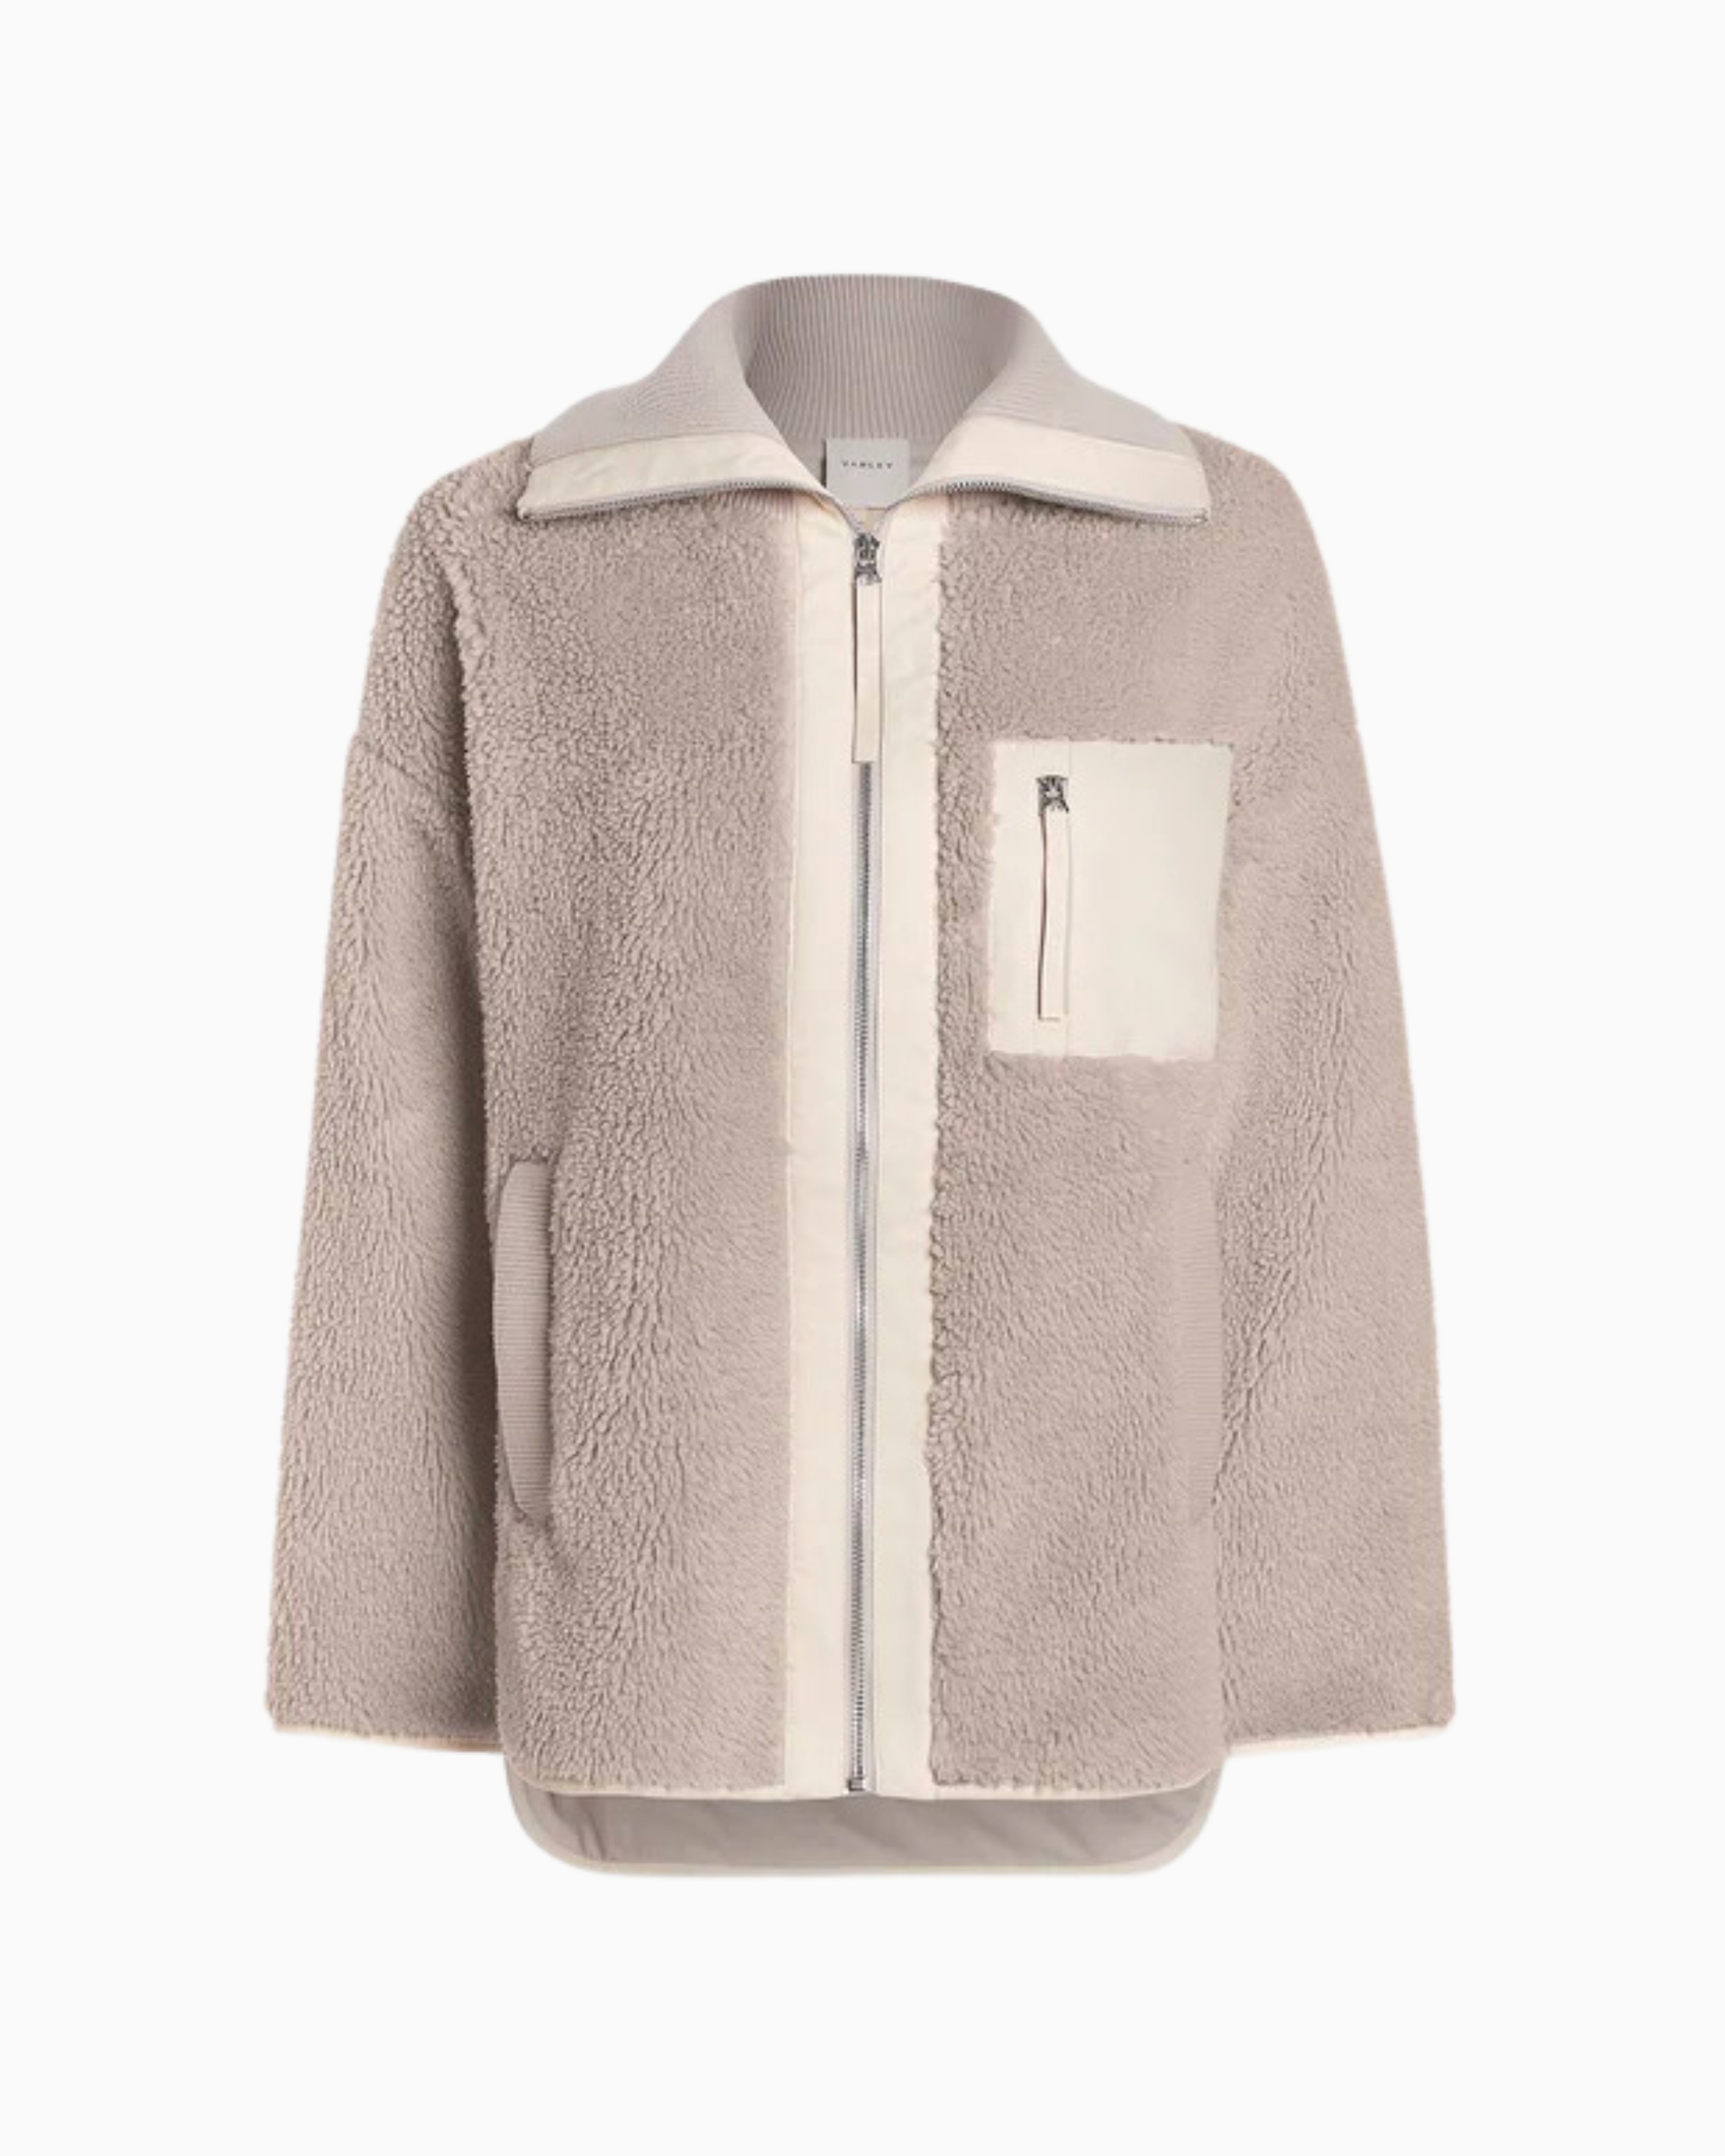 Varley Myla Zip Through Jacket in Chateau Grey/Sandshell